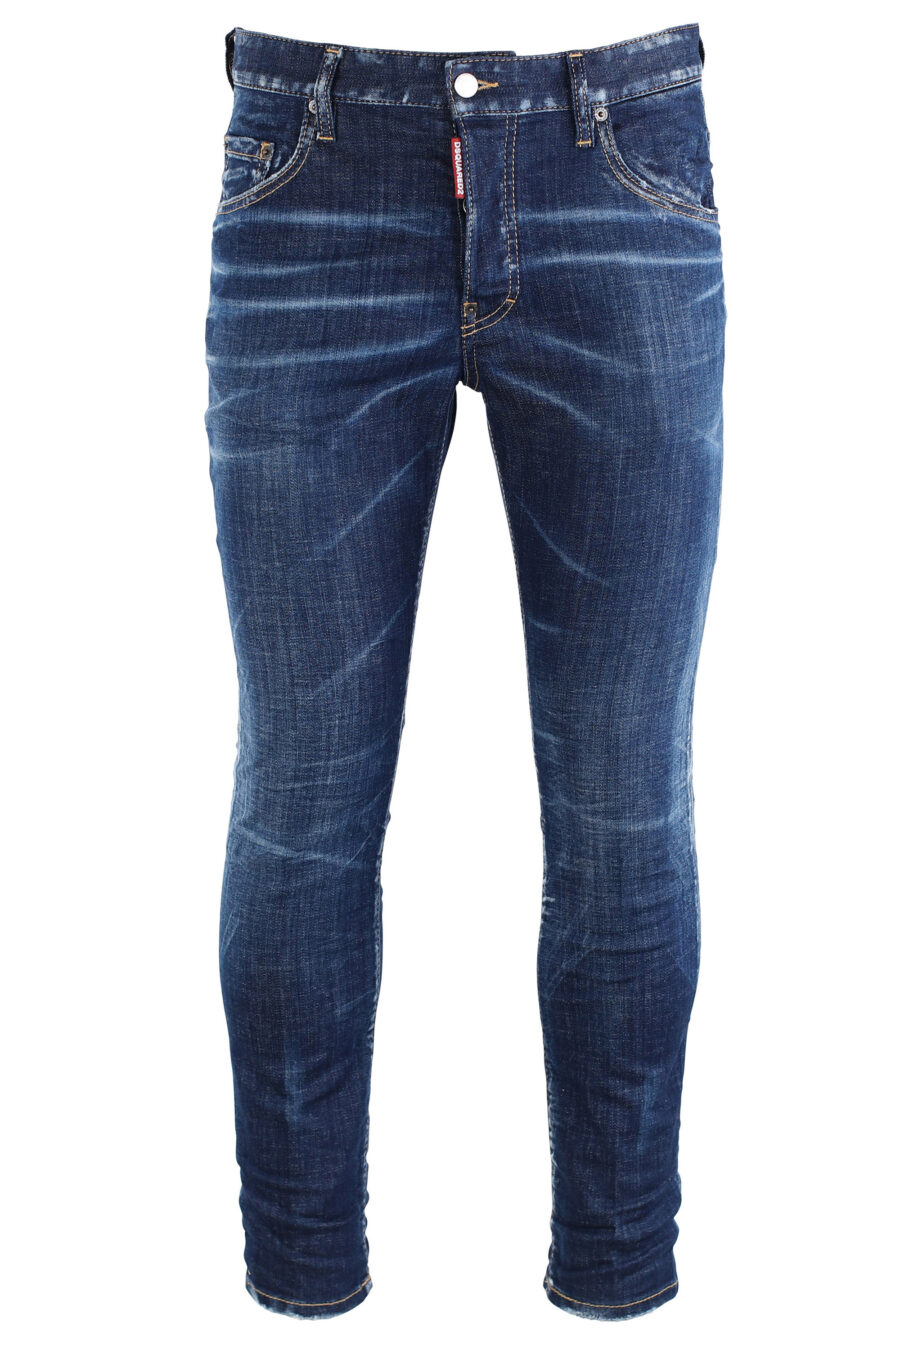 Denim trousers "24 seven skater jean" blue semi-worn - IMG 1612